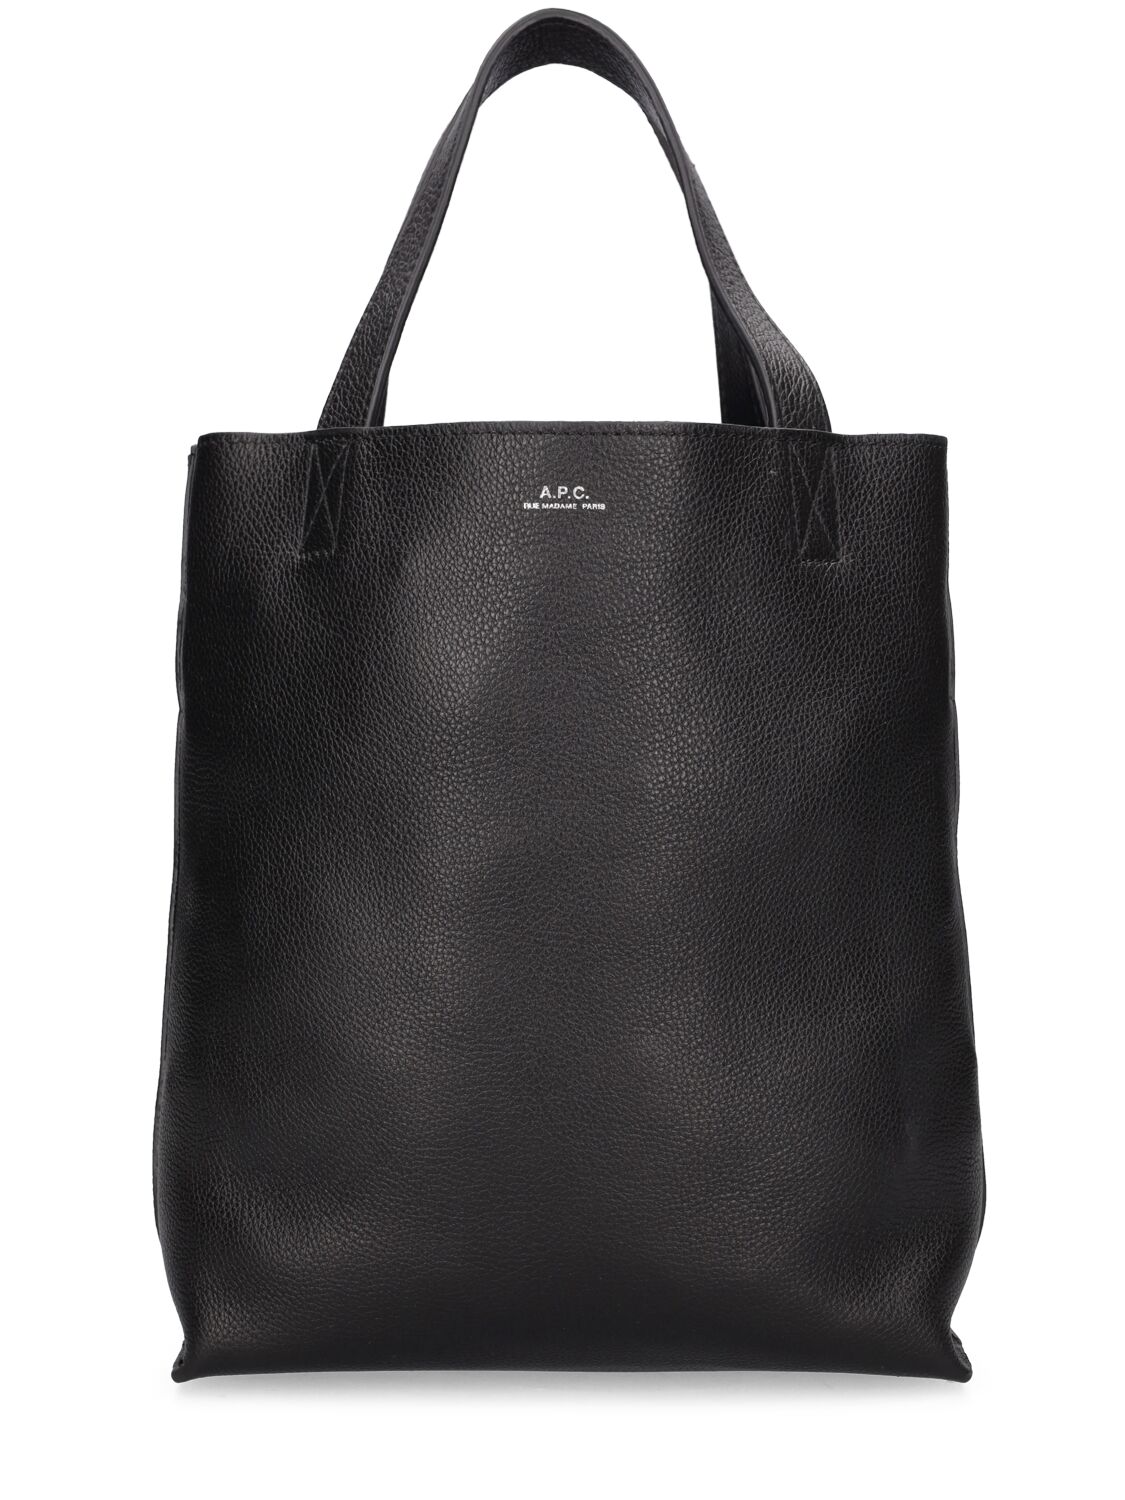 Apc Logo Small Leather Tote Bag In Black